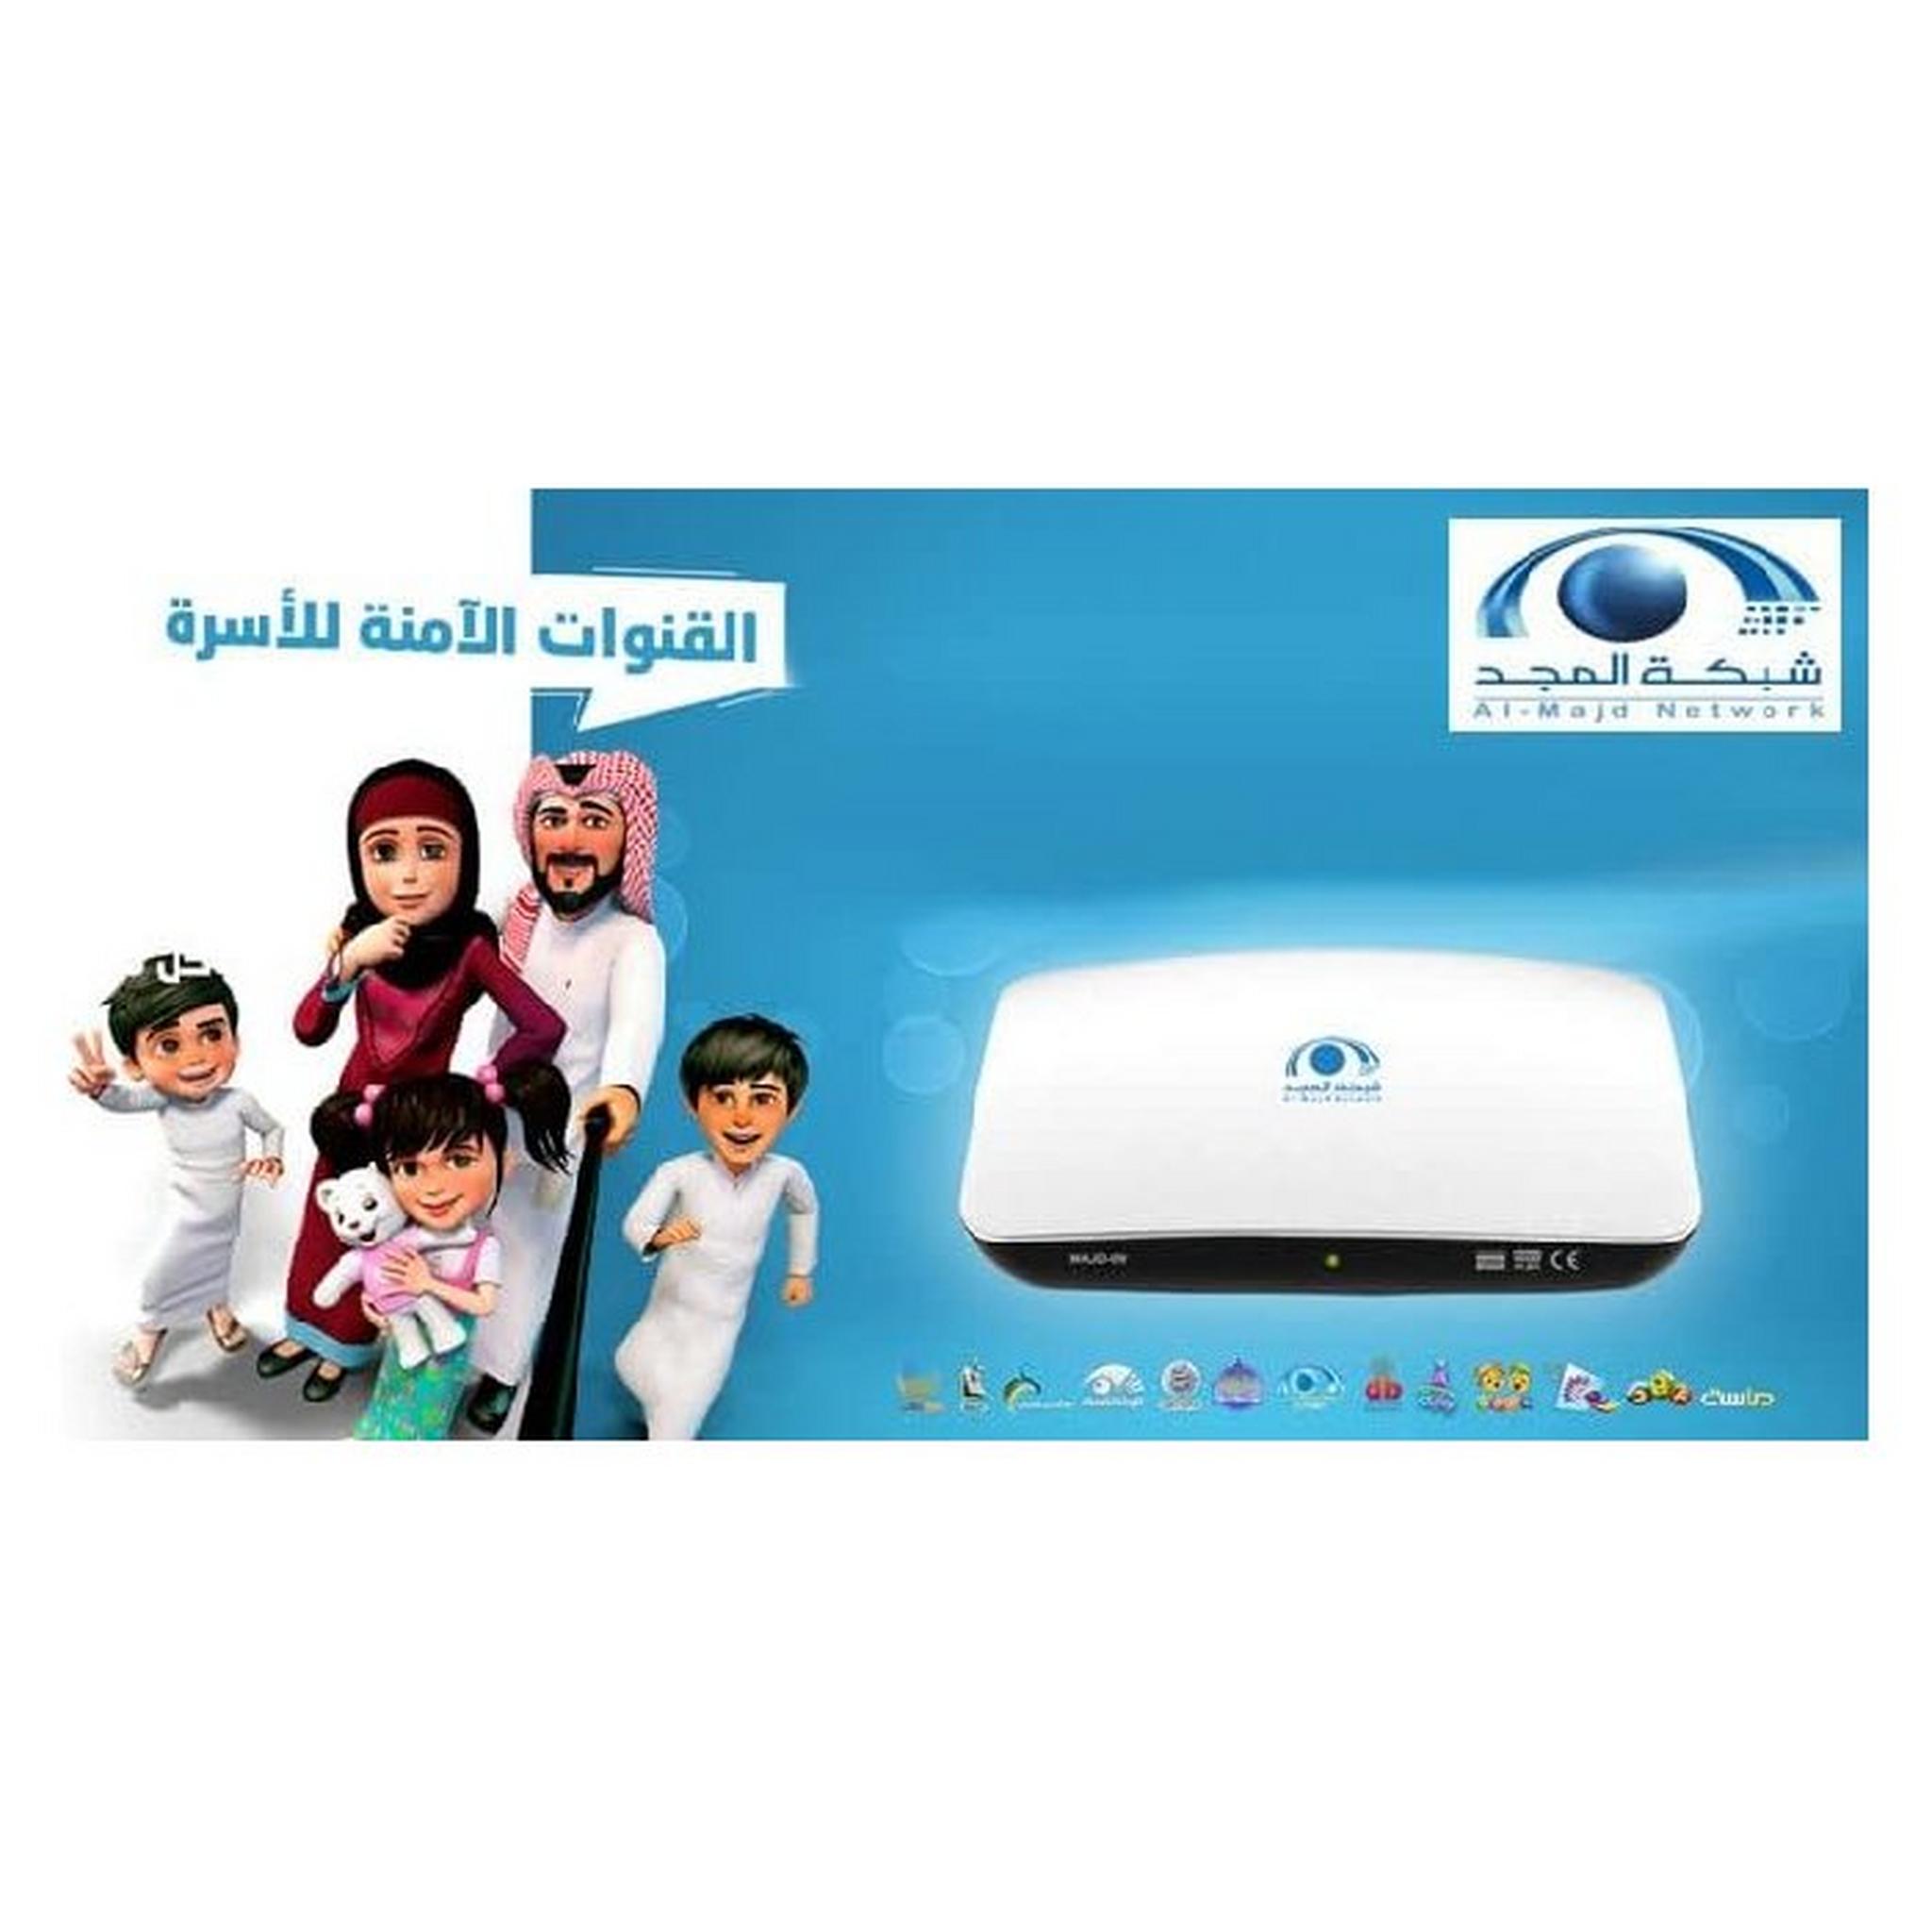 HUMAX AL Majd 9 Receiver FHD 3 Month Subscription, MAJD-09 – White